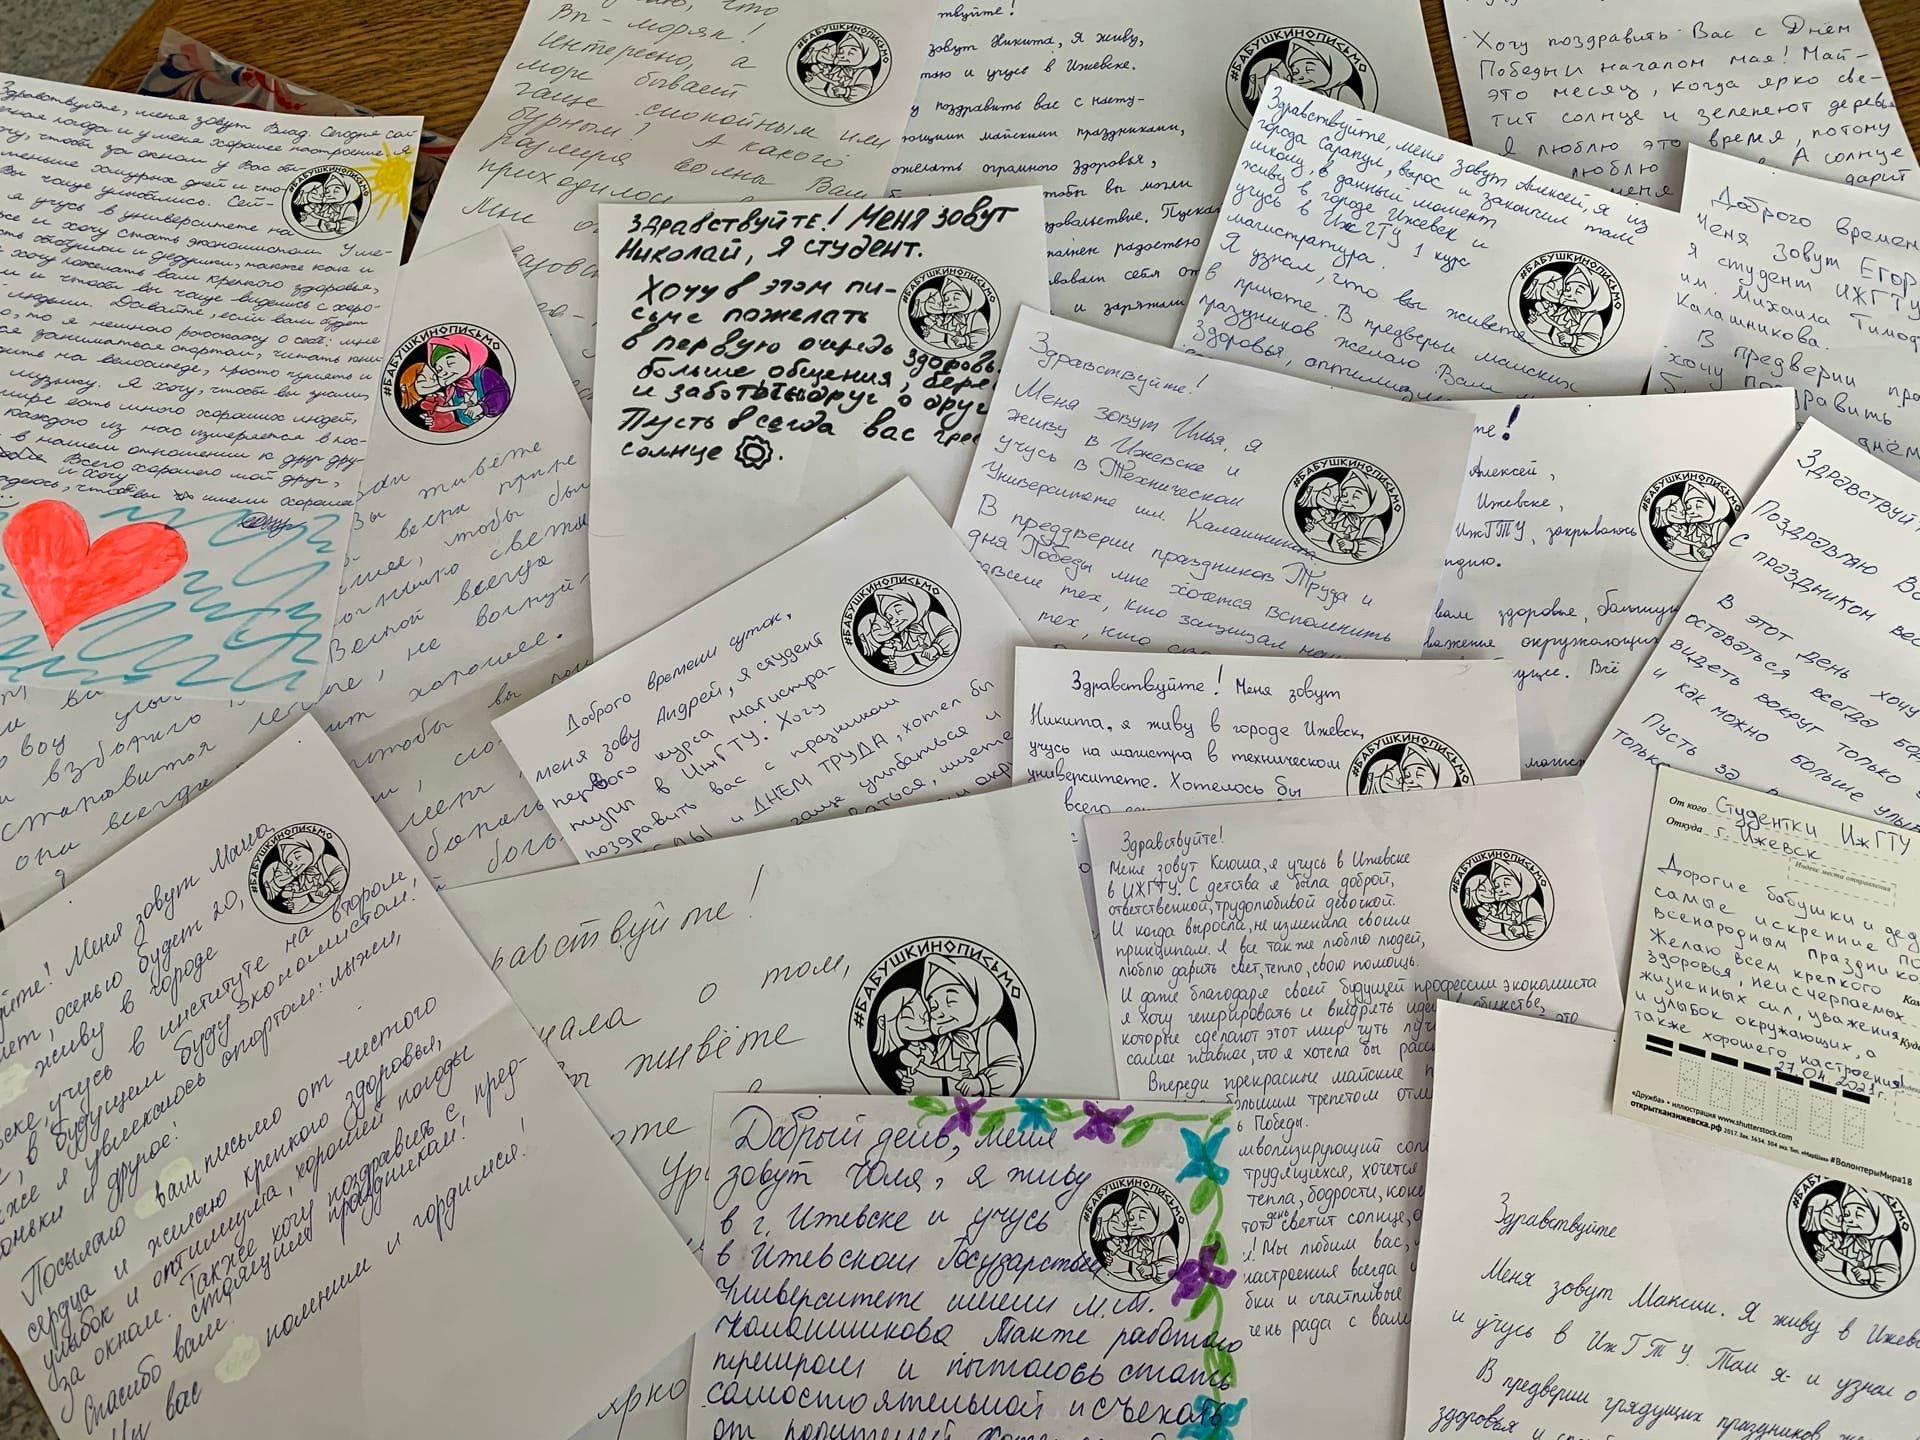 

Школьники из Ижевска отправят письма одиноким бабушкам и дедушкам

